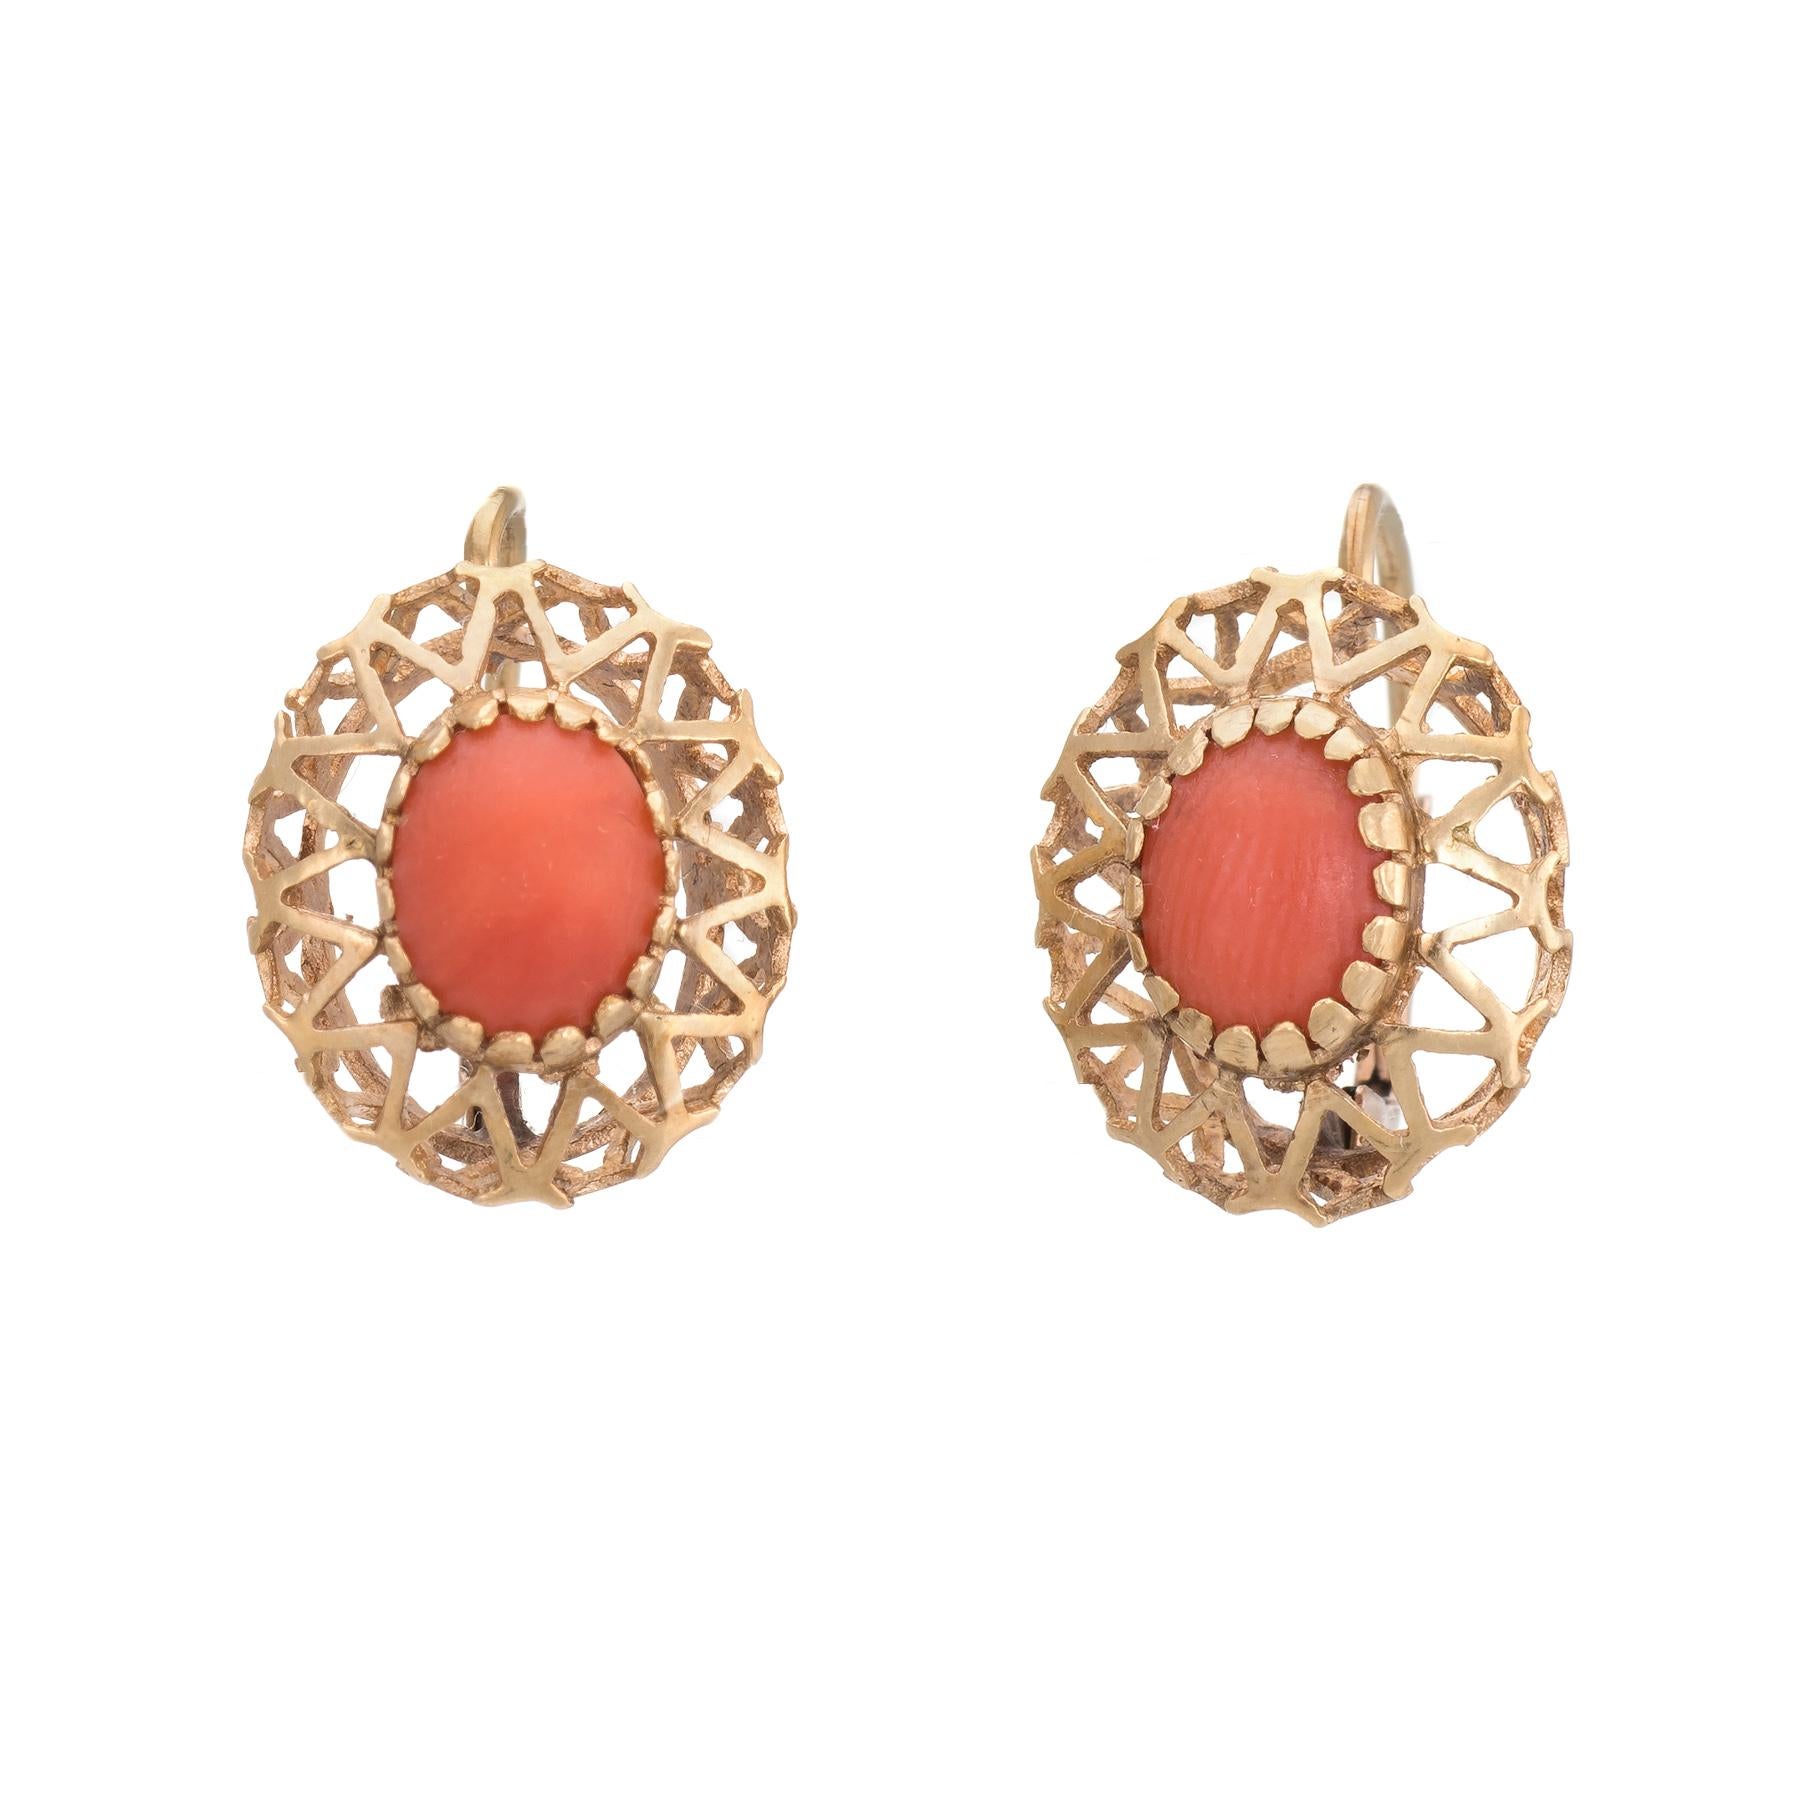 Vintage Red Coral Earrings Drops 10 Karat Gold Estate Fine Jewelry Heirloom